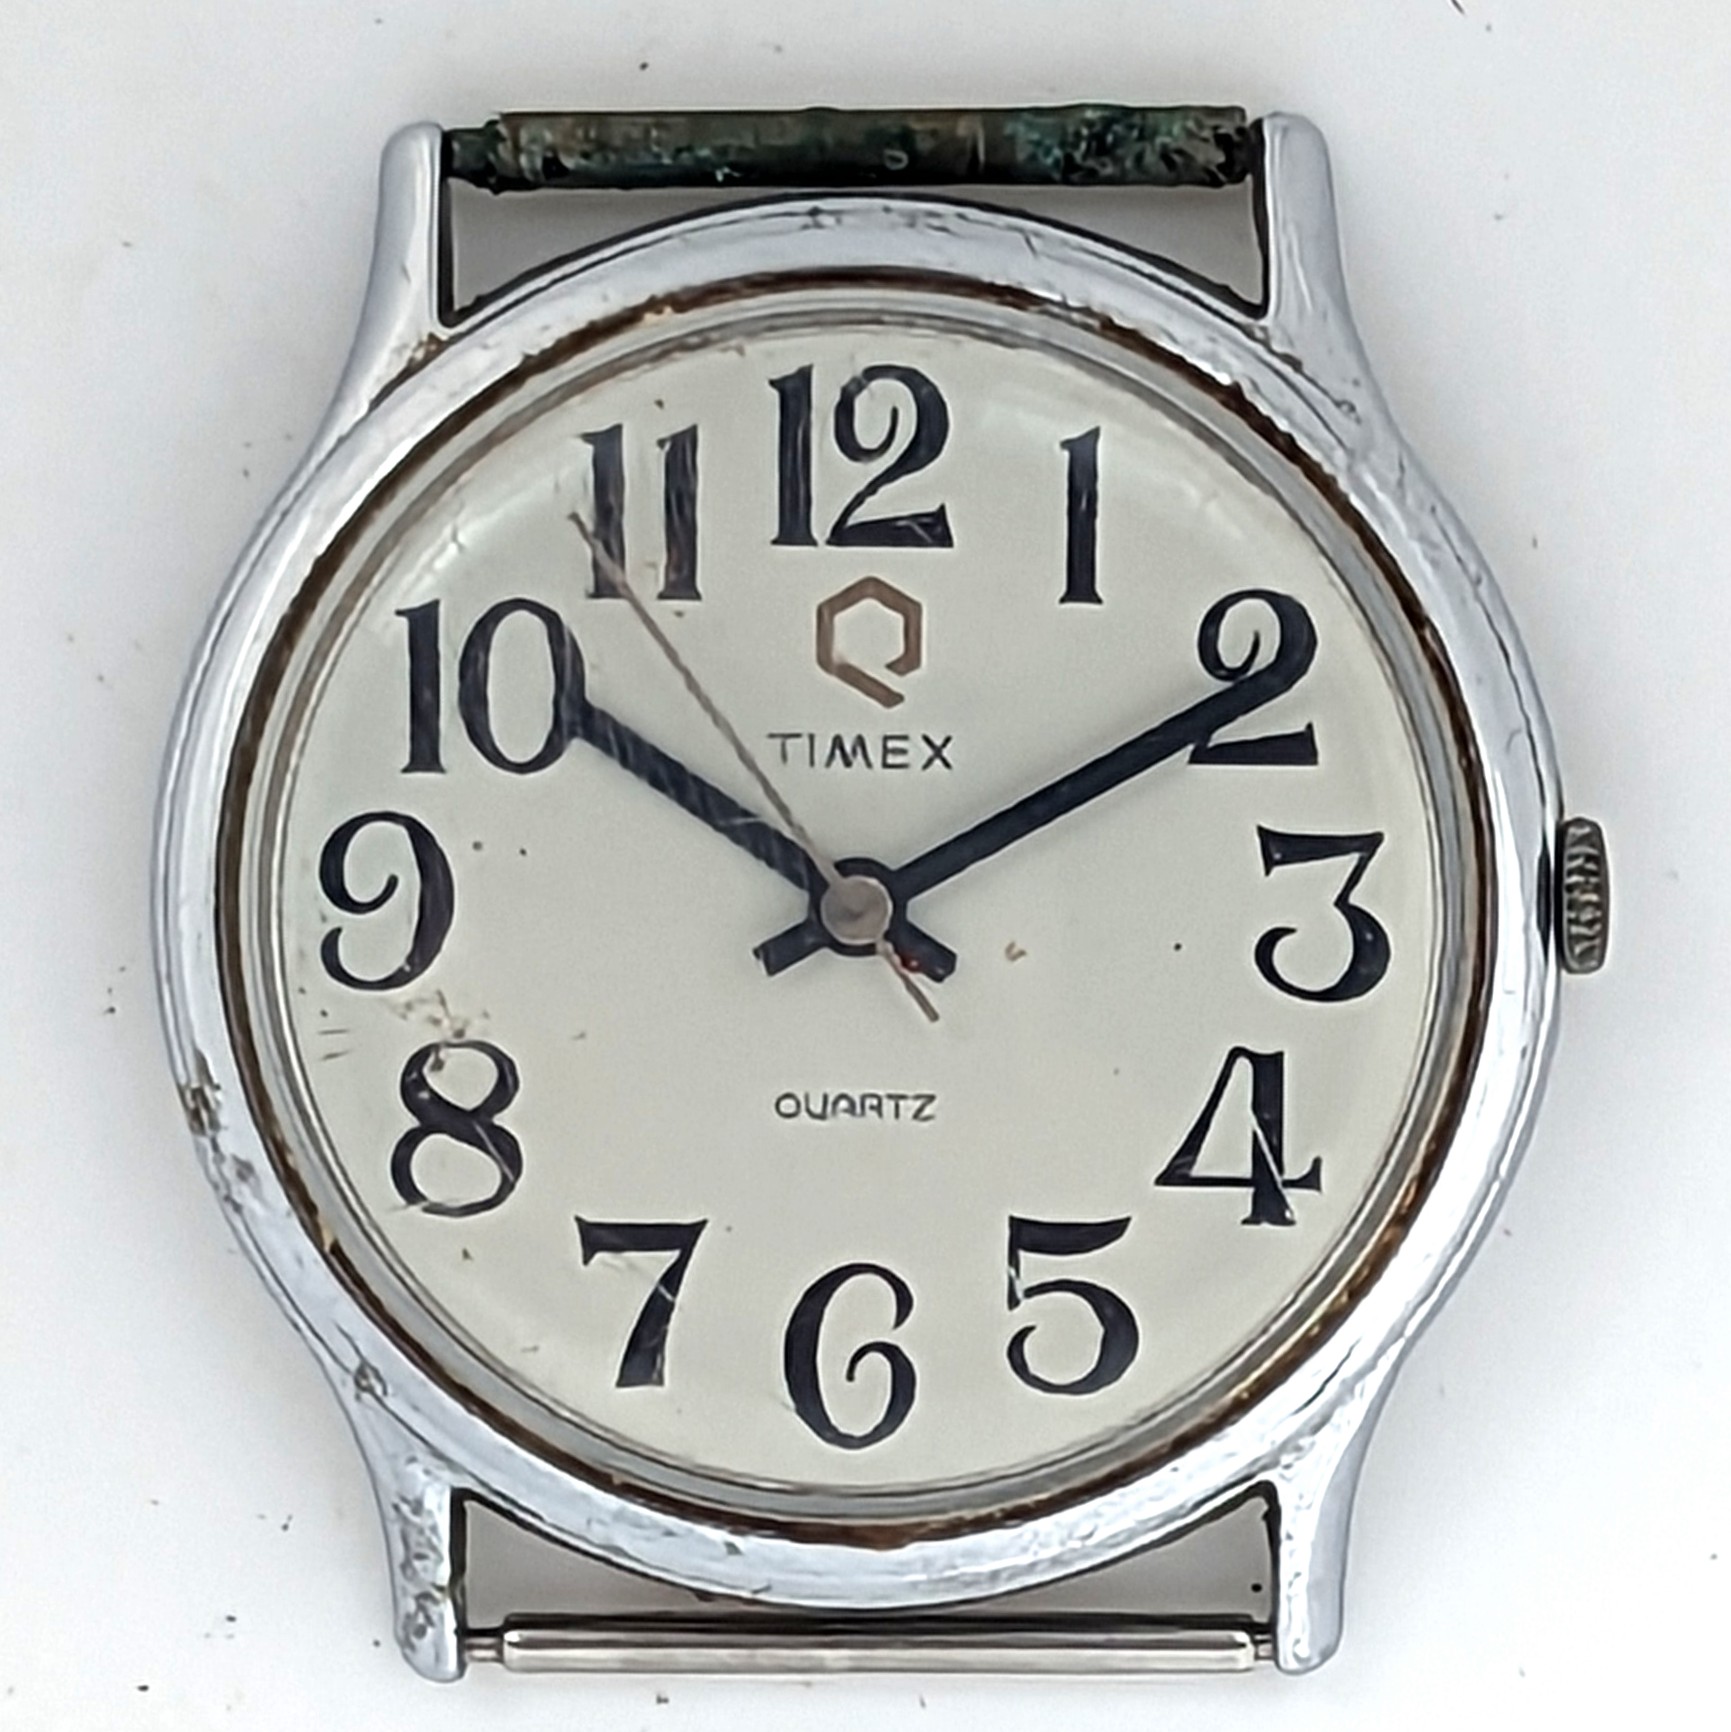 Timex Q 42711 13586 [1986] Quartz